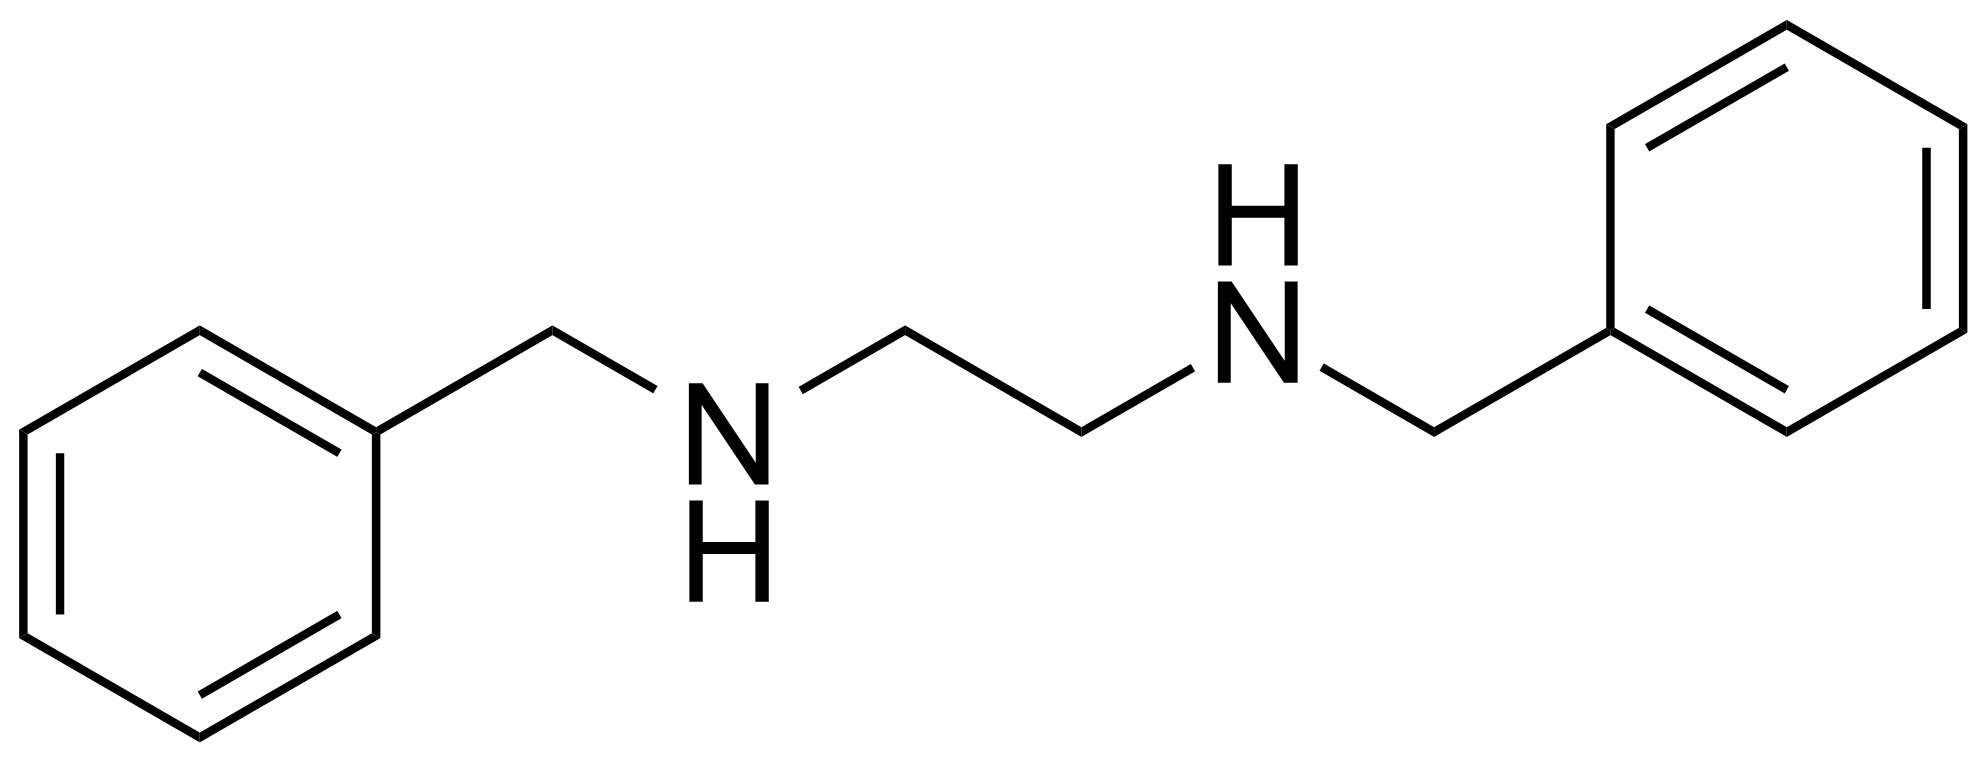 Structure of N,N'-Dibenzylethylenediamine